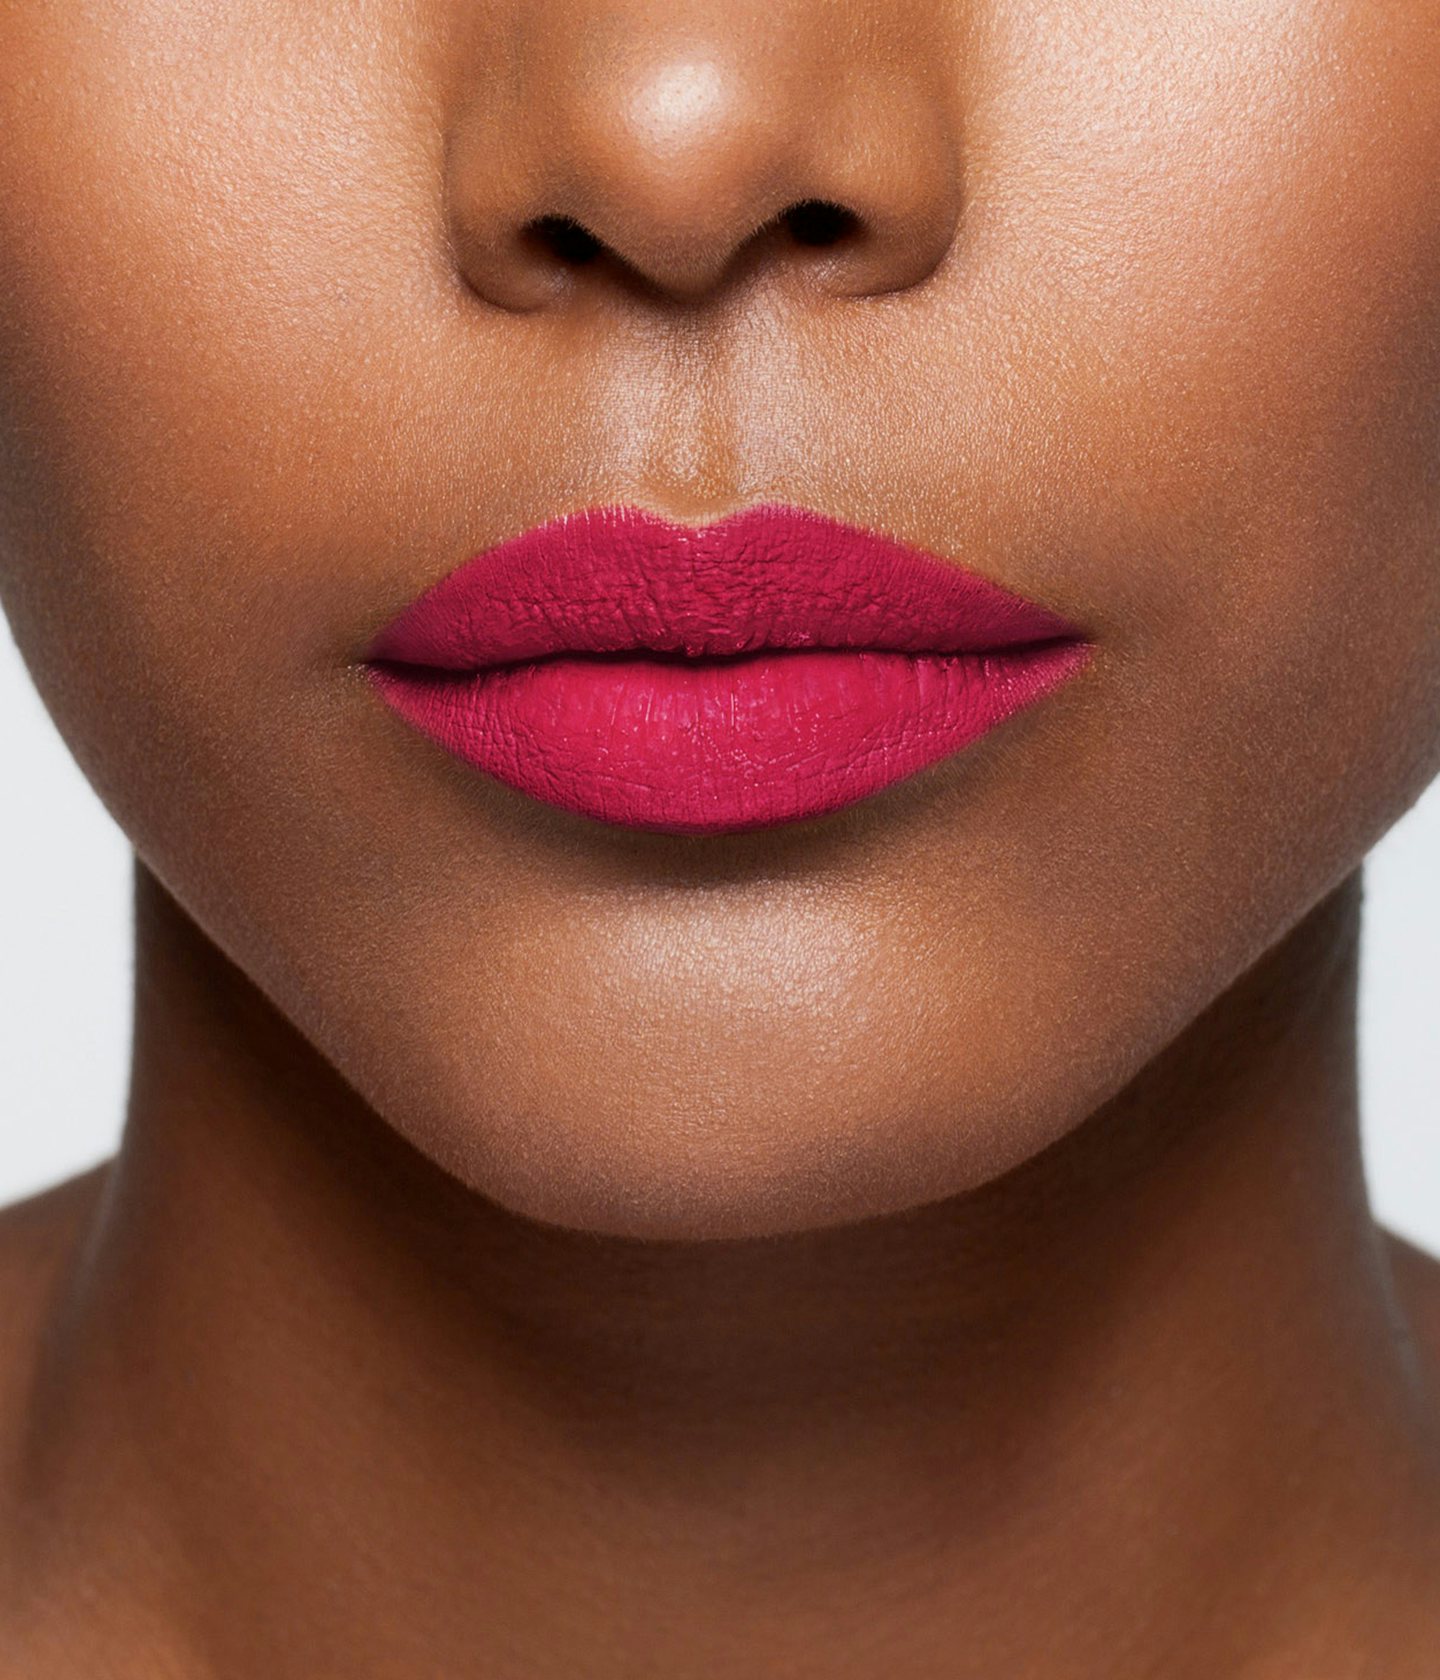 La bouche rouge Princess Pink lipstick shade on the lips of a dark skin model